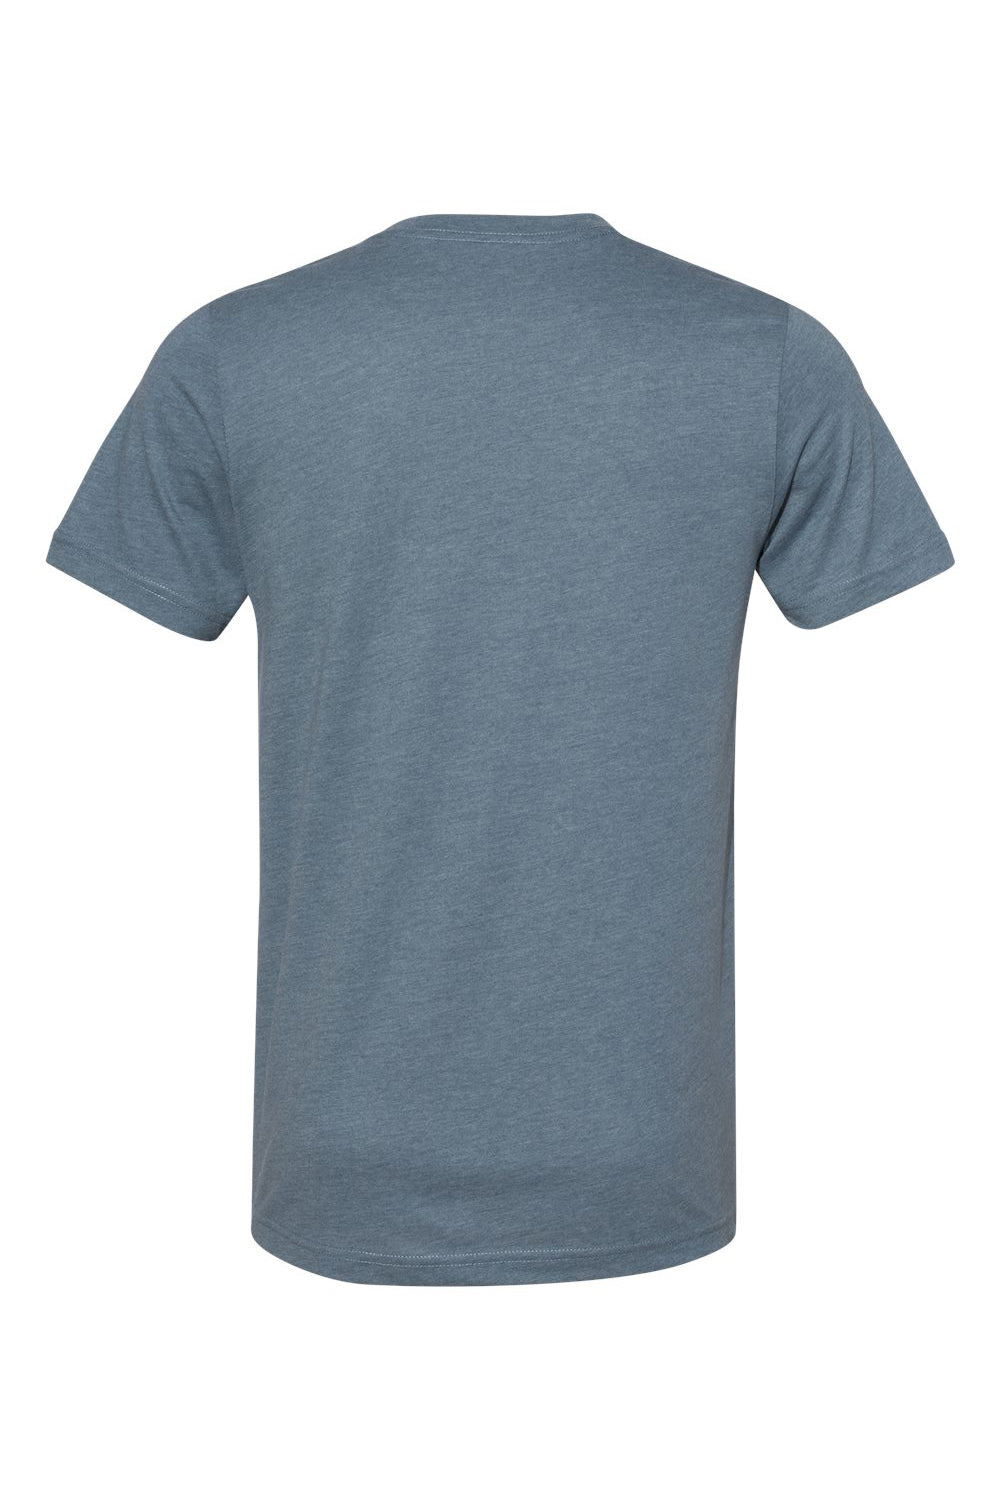 Bella + Canvas BC3301/3301C/3301 Mens Jersey Short Sleeve Crewneck T-Shirt Heather Slate Blue Flat Back